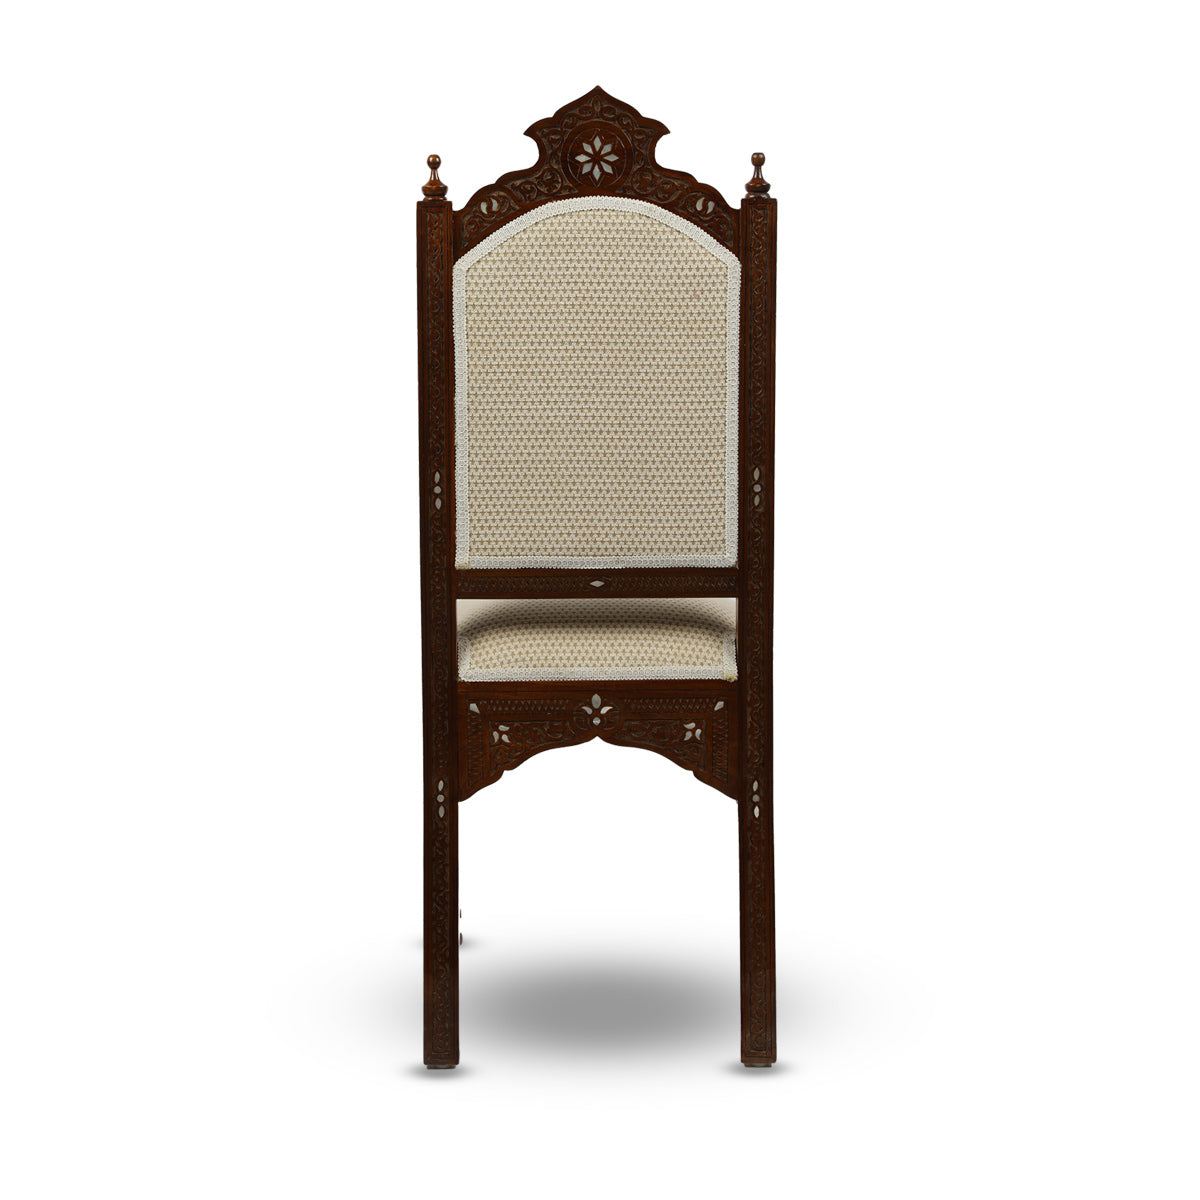 Back View of Upholstered Sleek Modern Wooden Chair